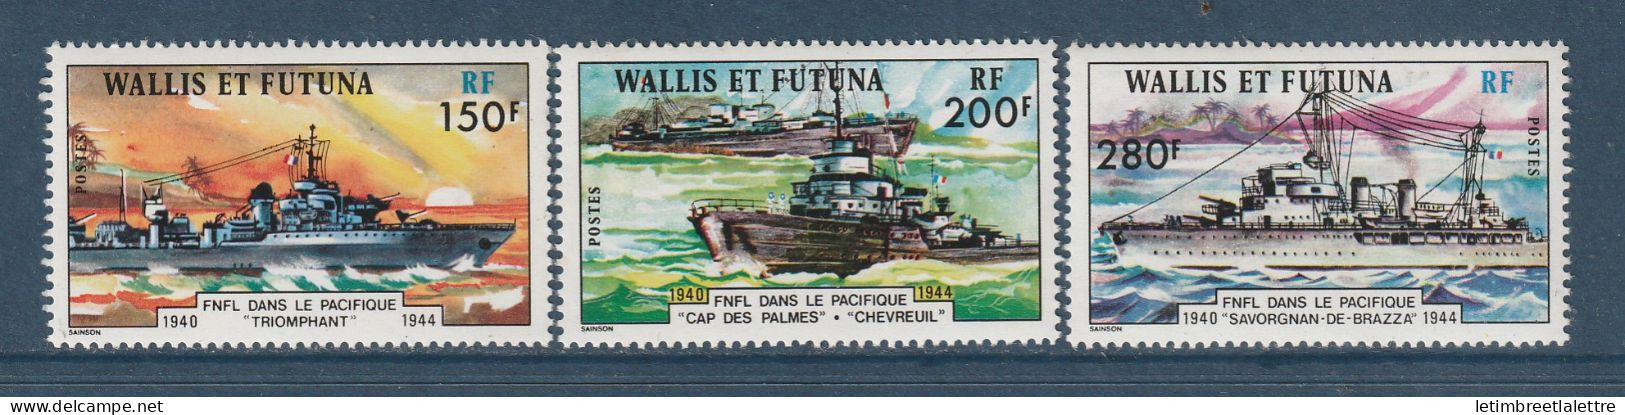 Wallis Et Futuna - YT N° 210 à 212 ** - Neuf Sans Charnière - 1978 - Nuevos